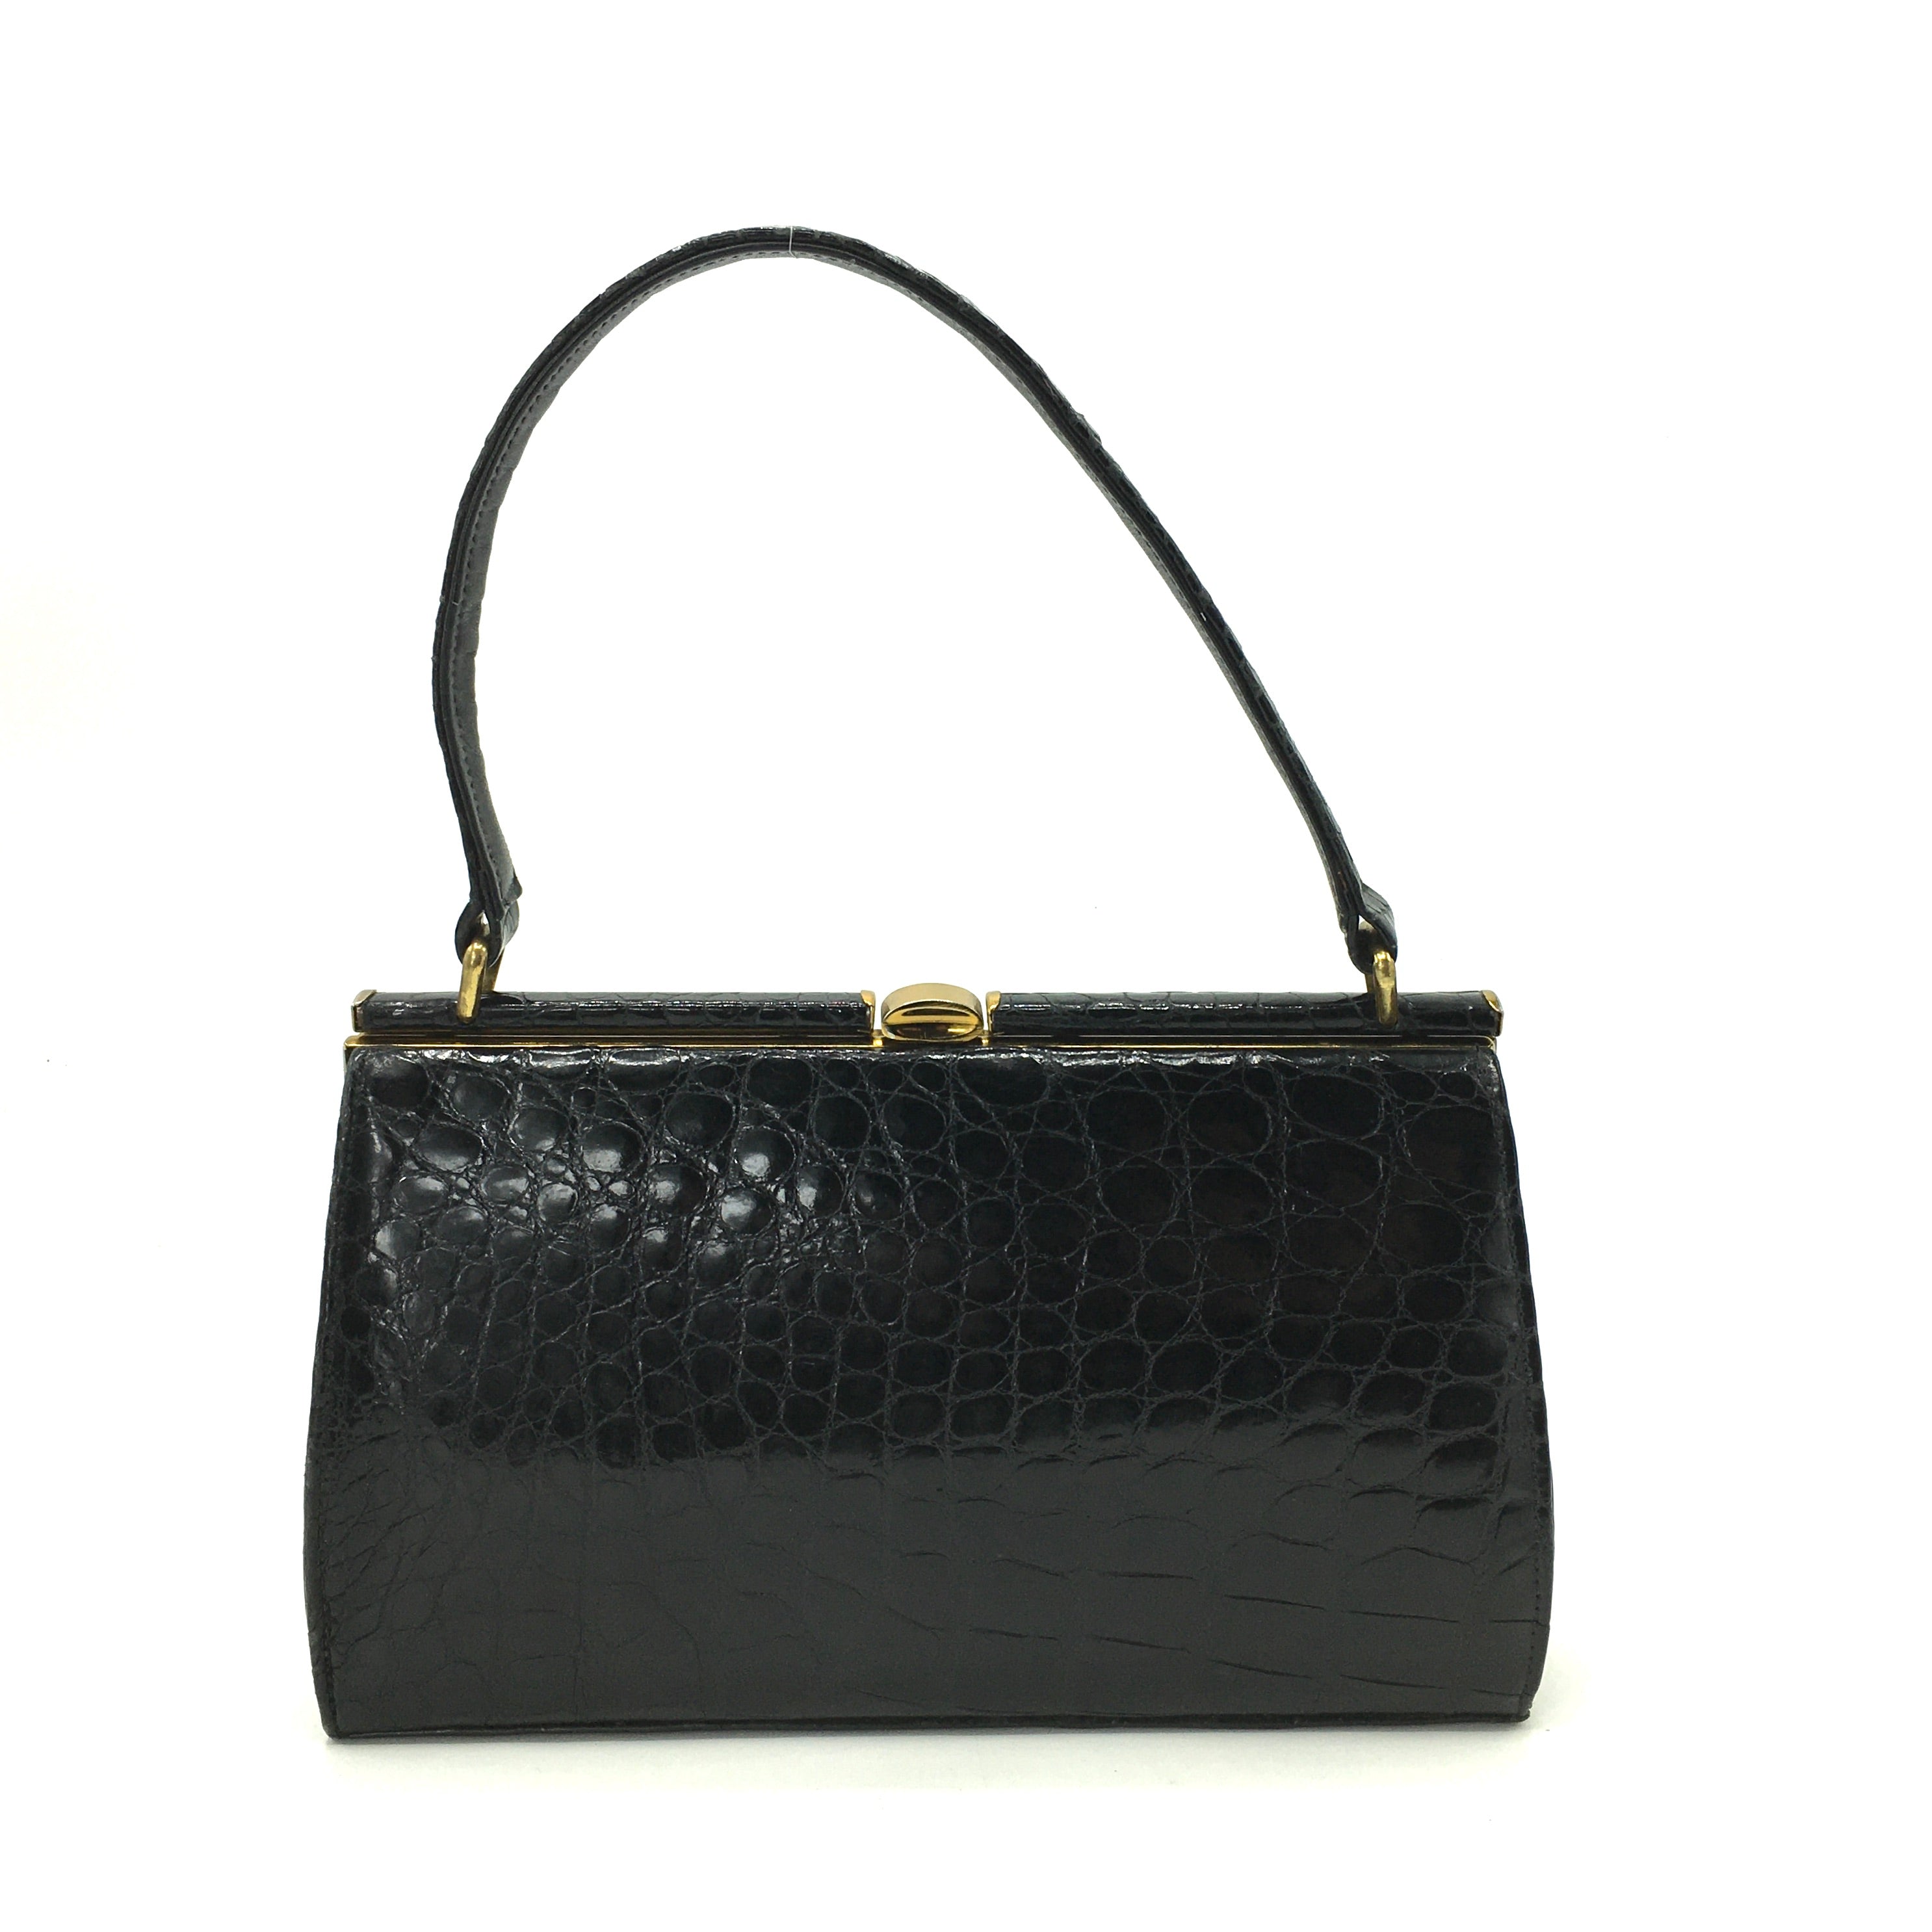 Moreware Vintage Crocodile Skin Handbag